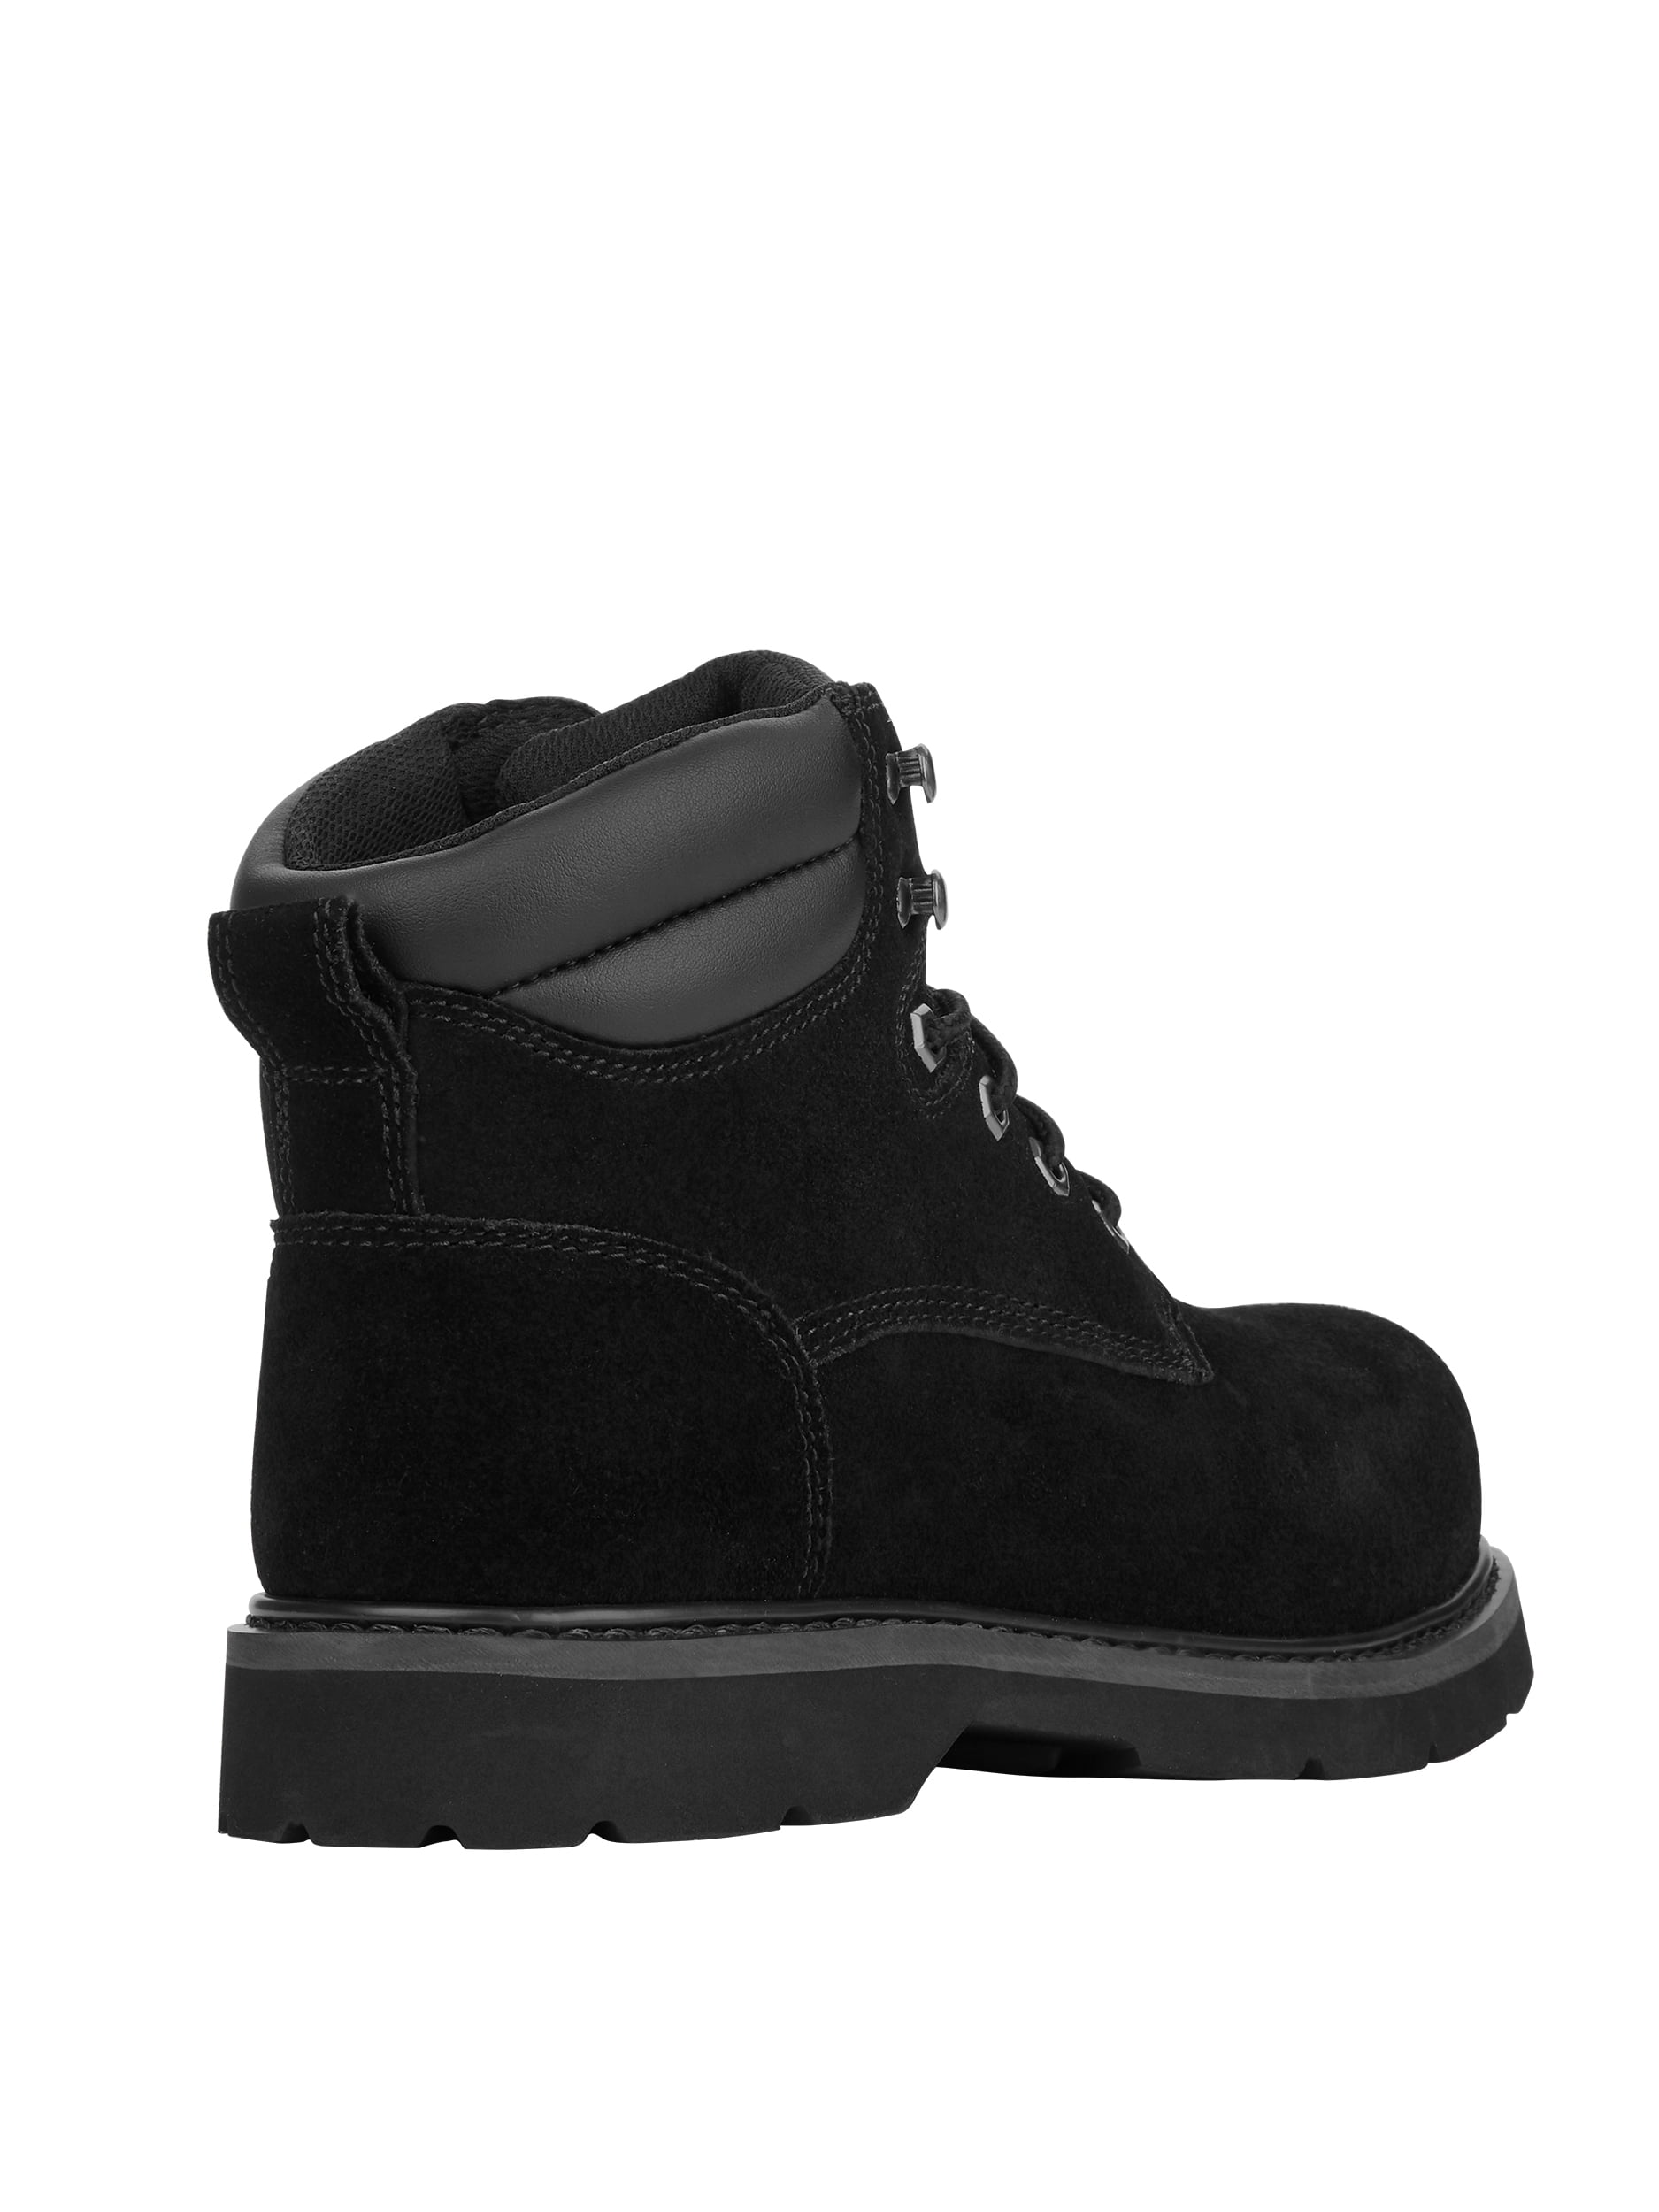 brahma boots black